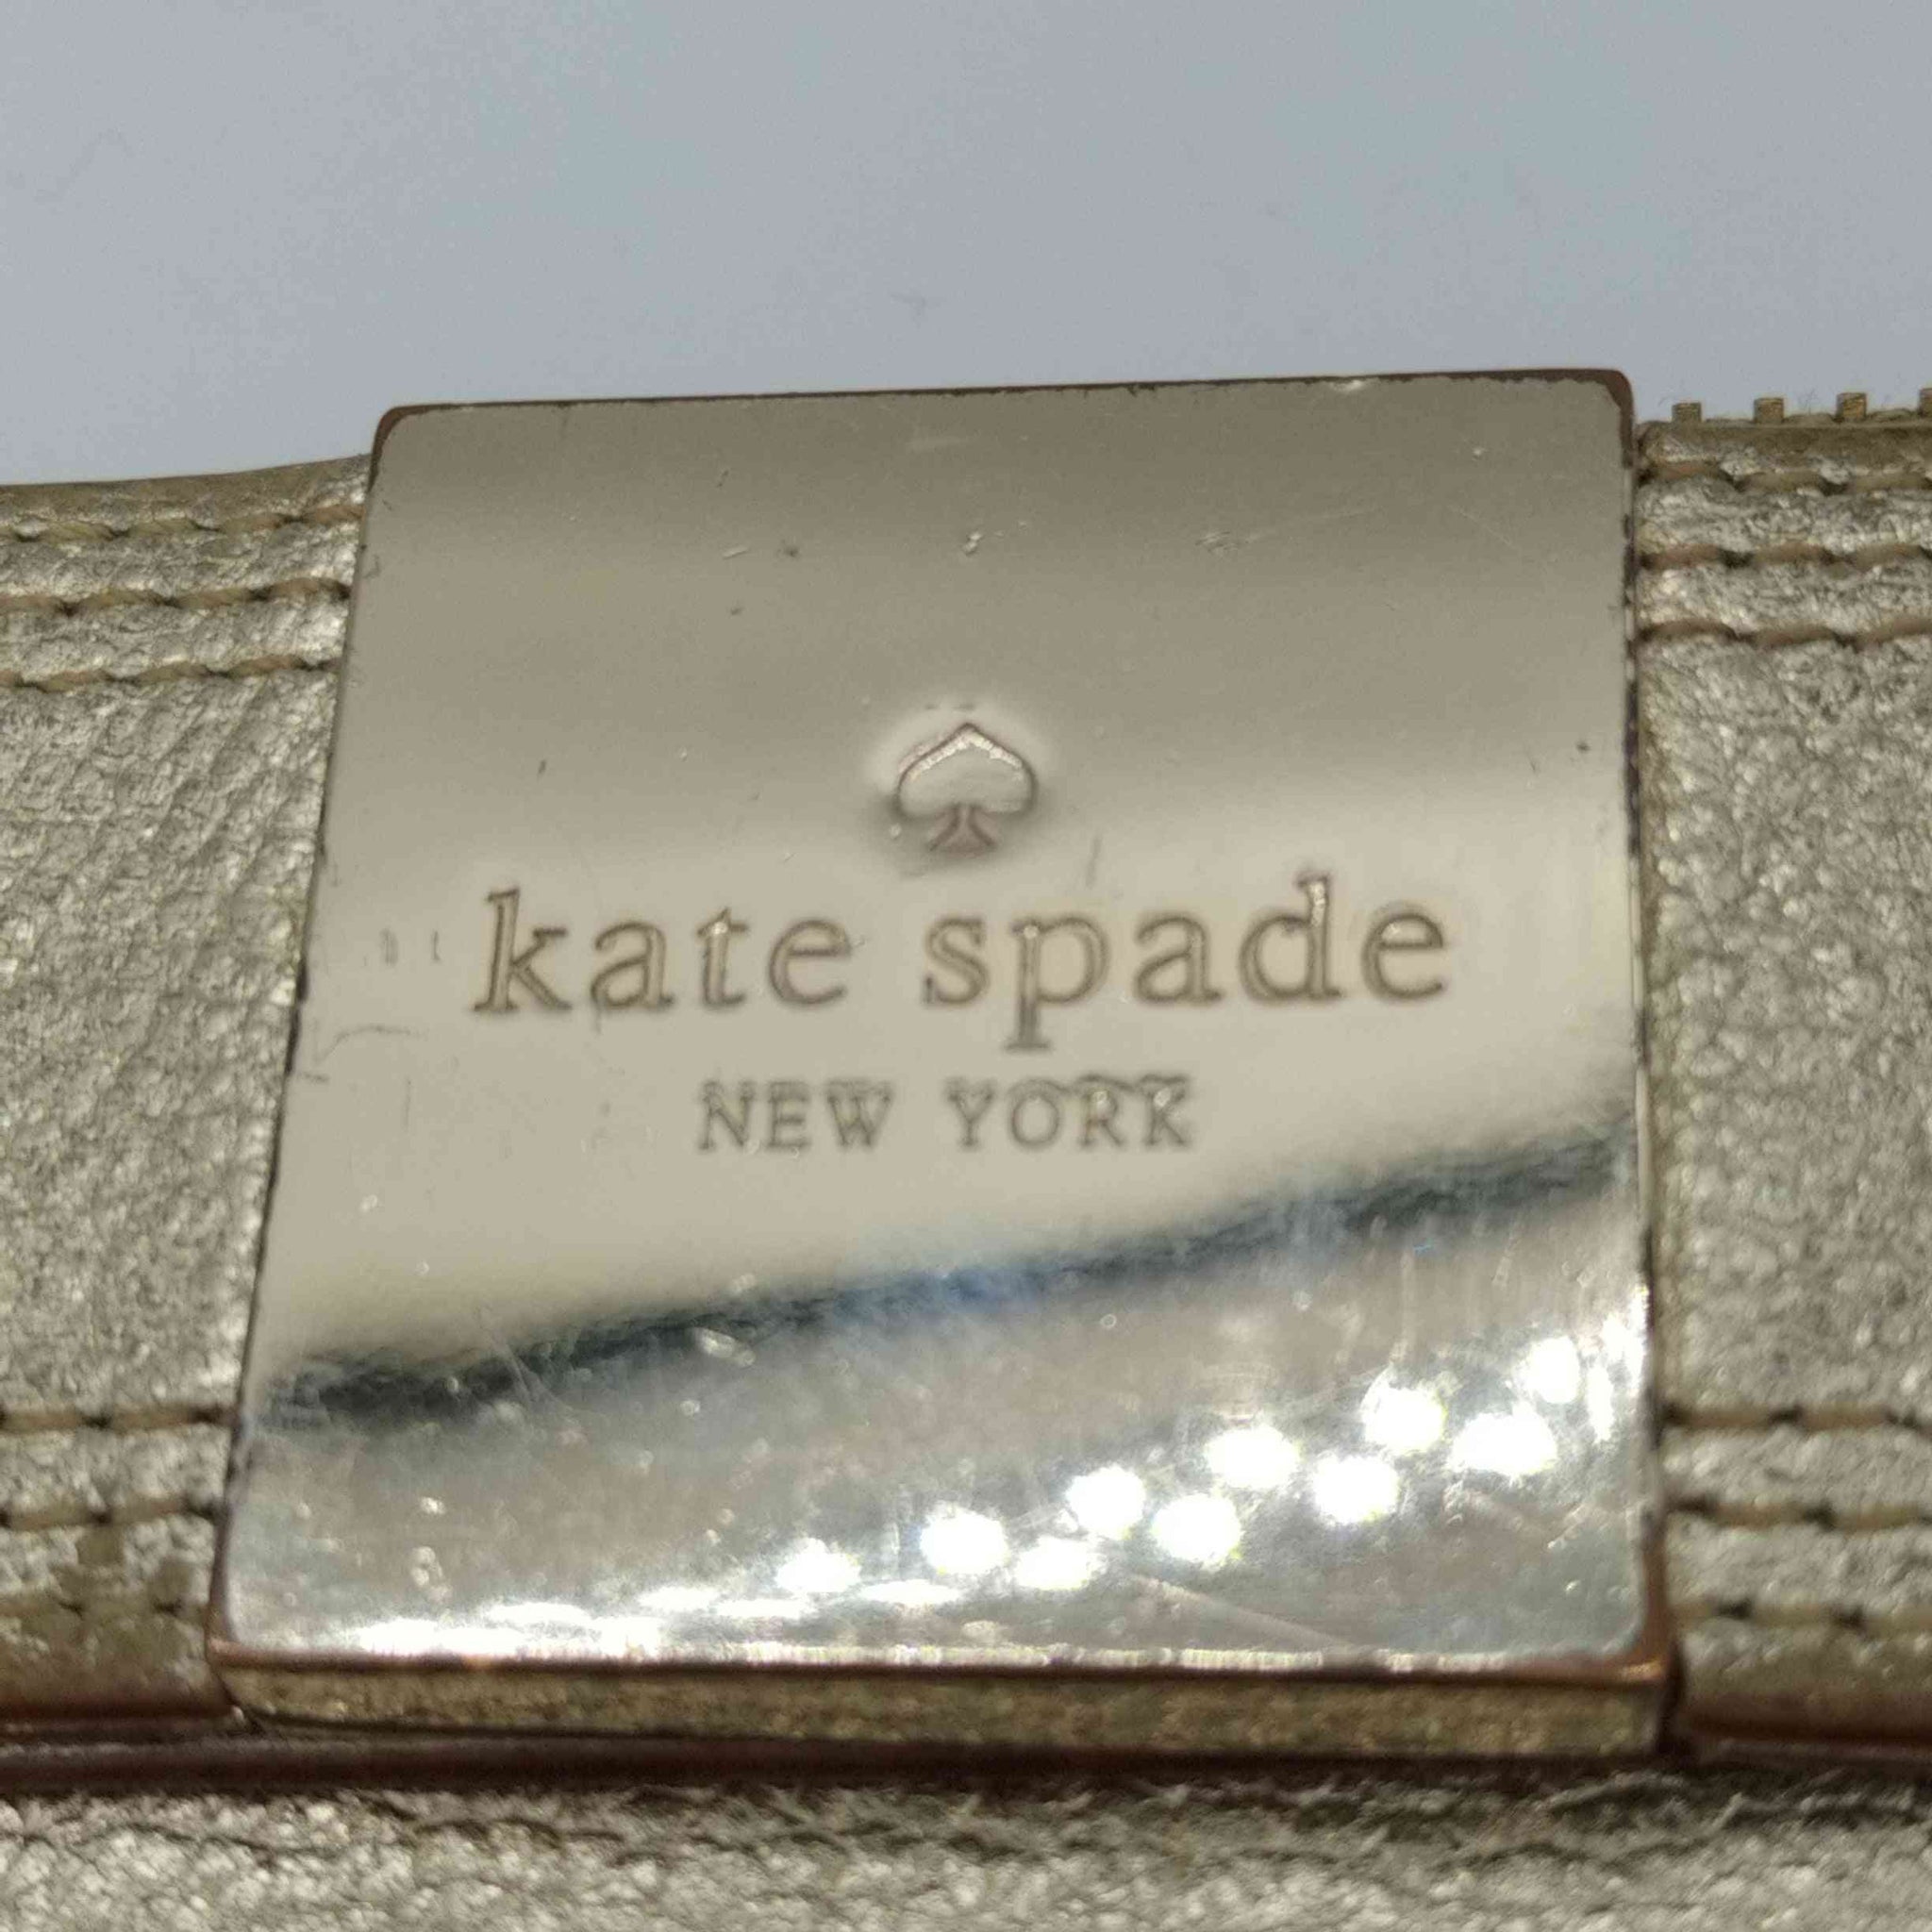 Kate spade(ケイトスペード)ラウンドファスナー 長財布